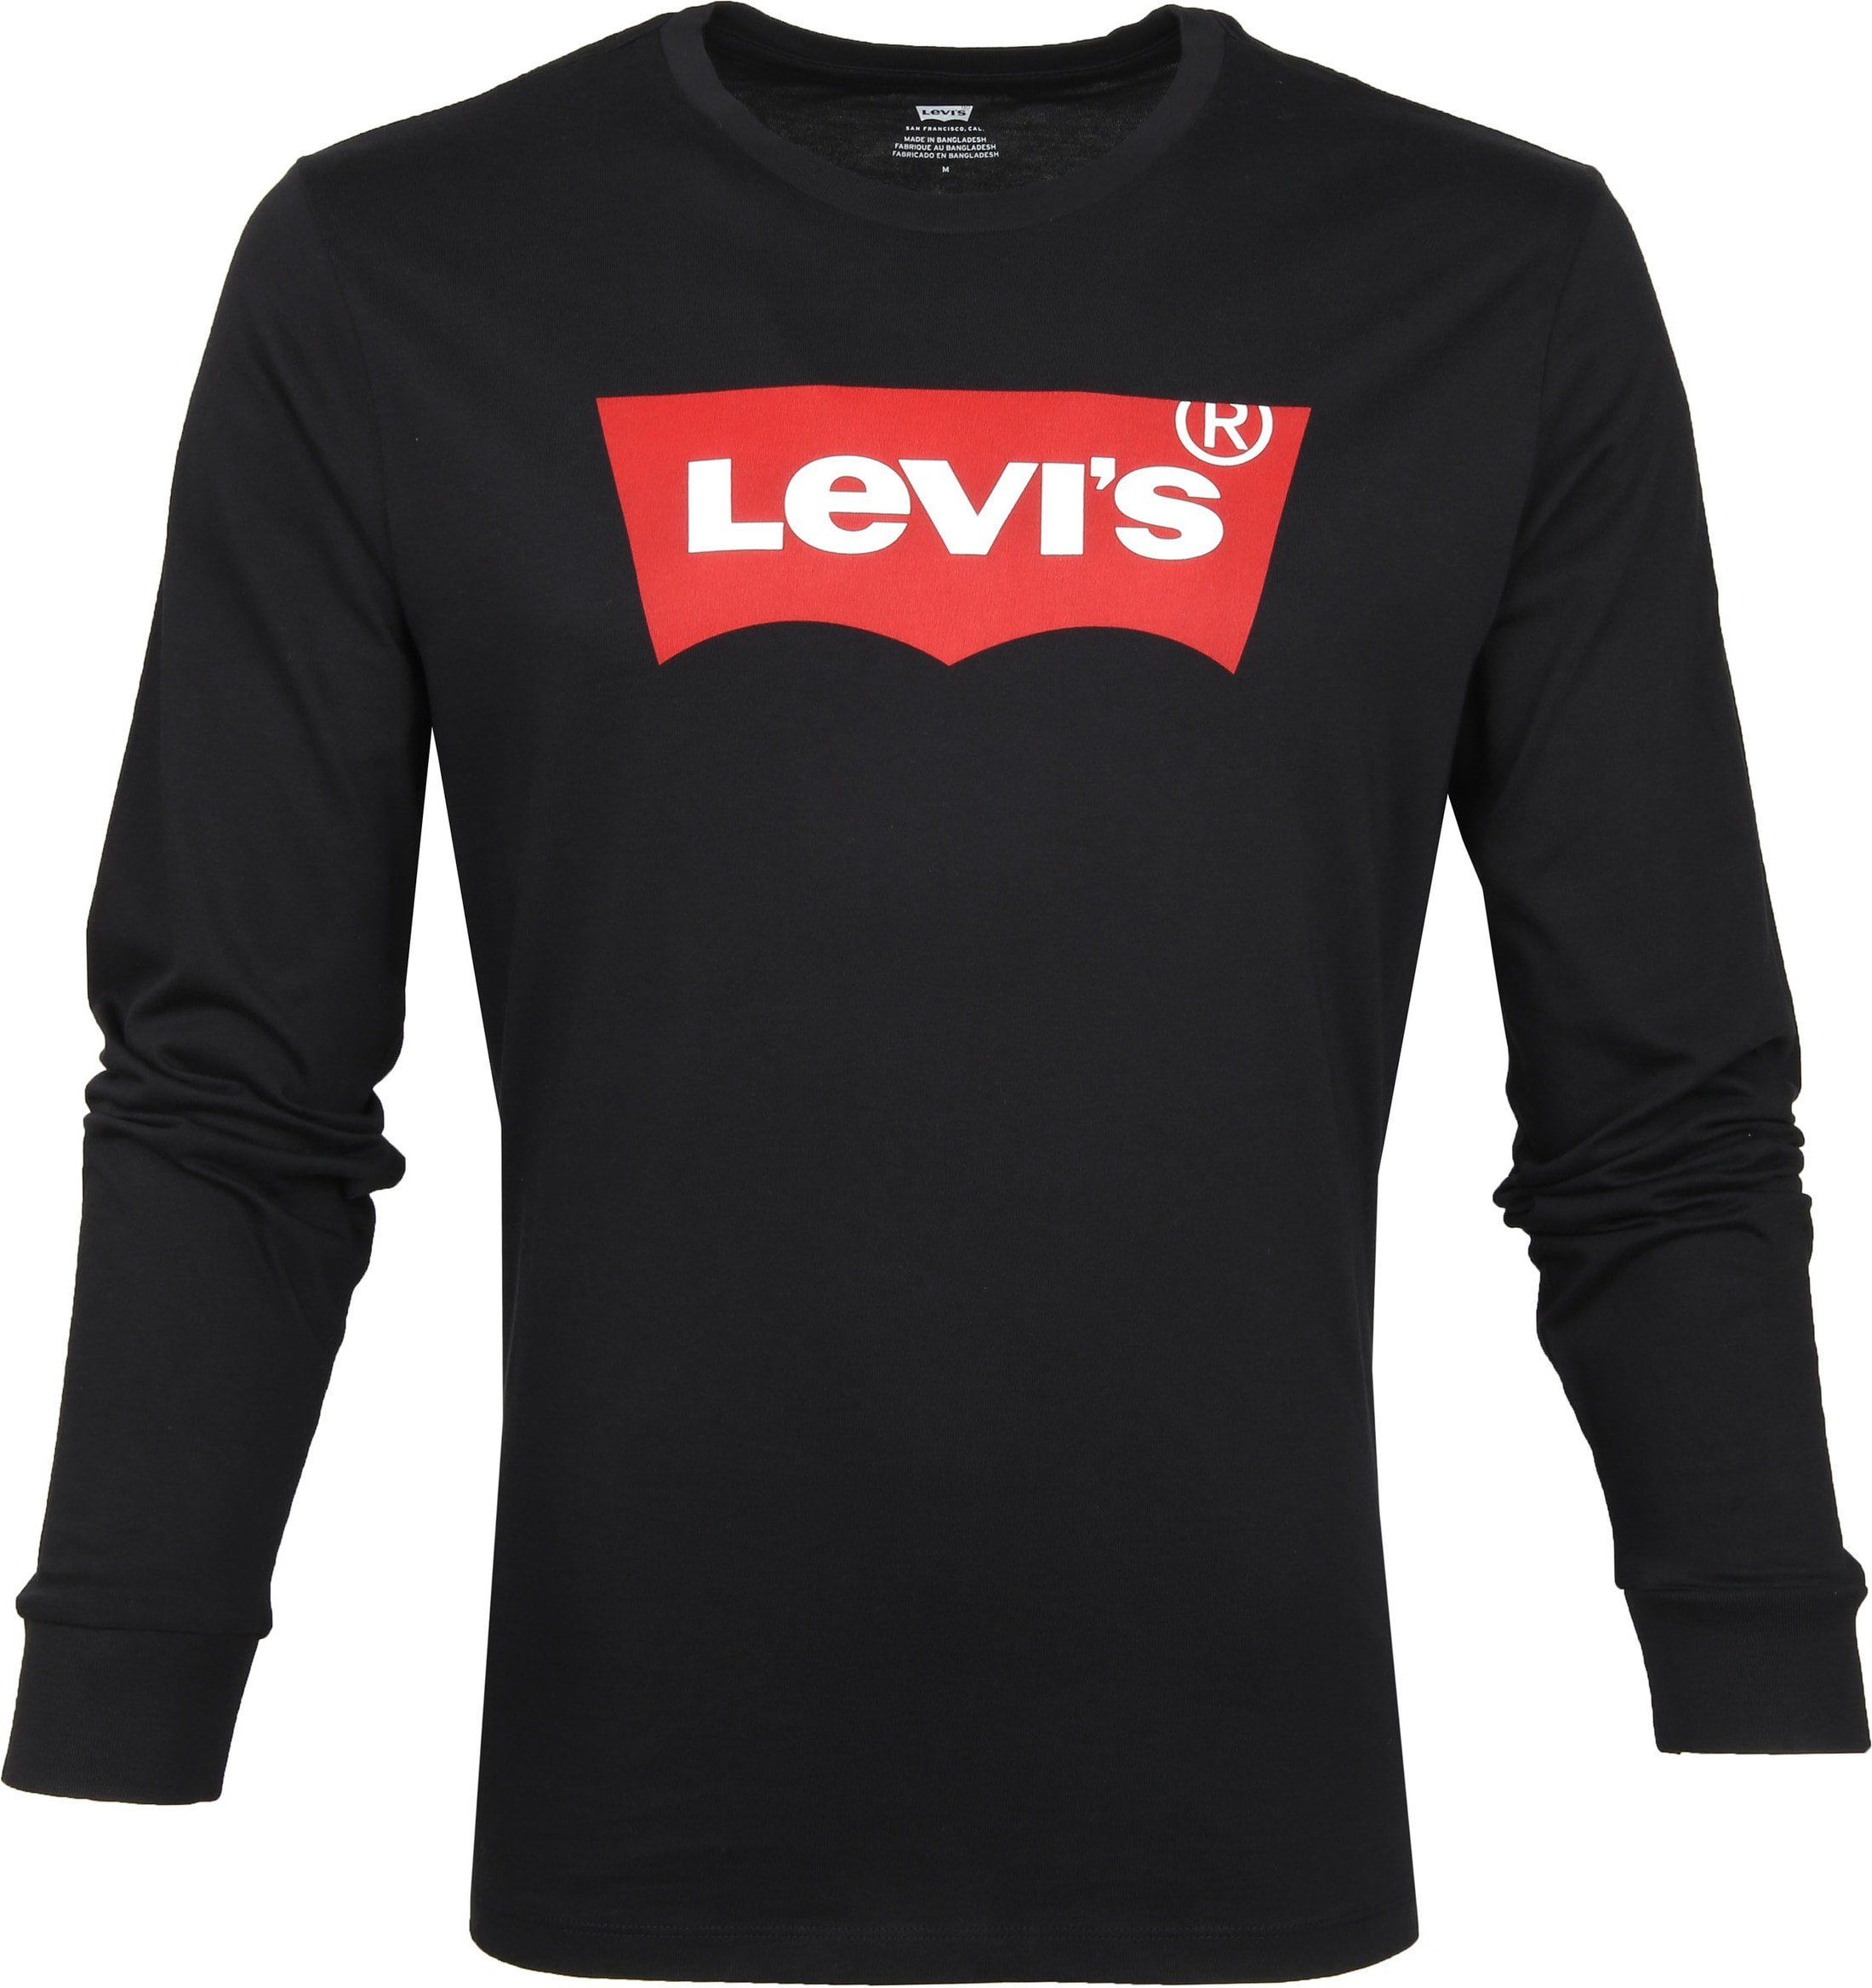 Levi's Original LS T-shirt Black size L